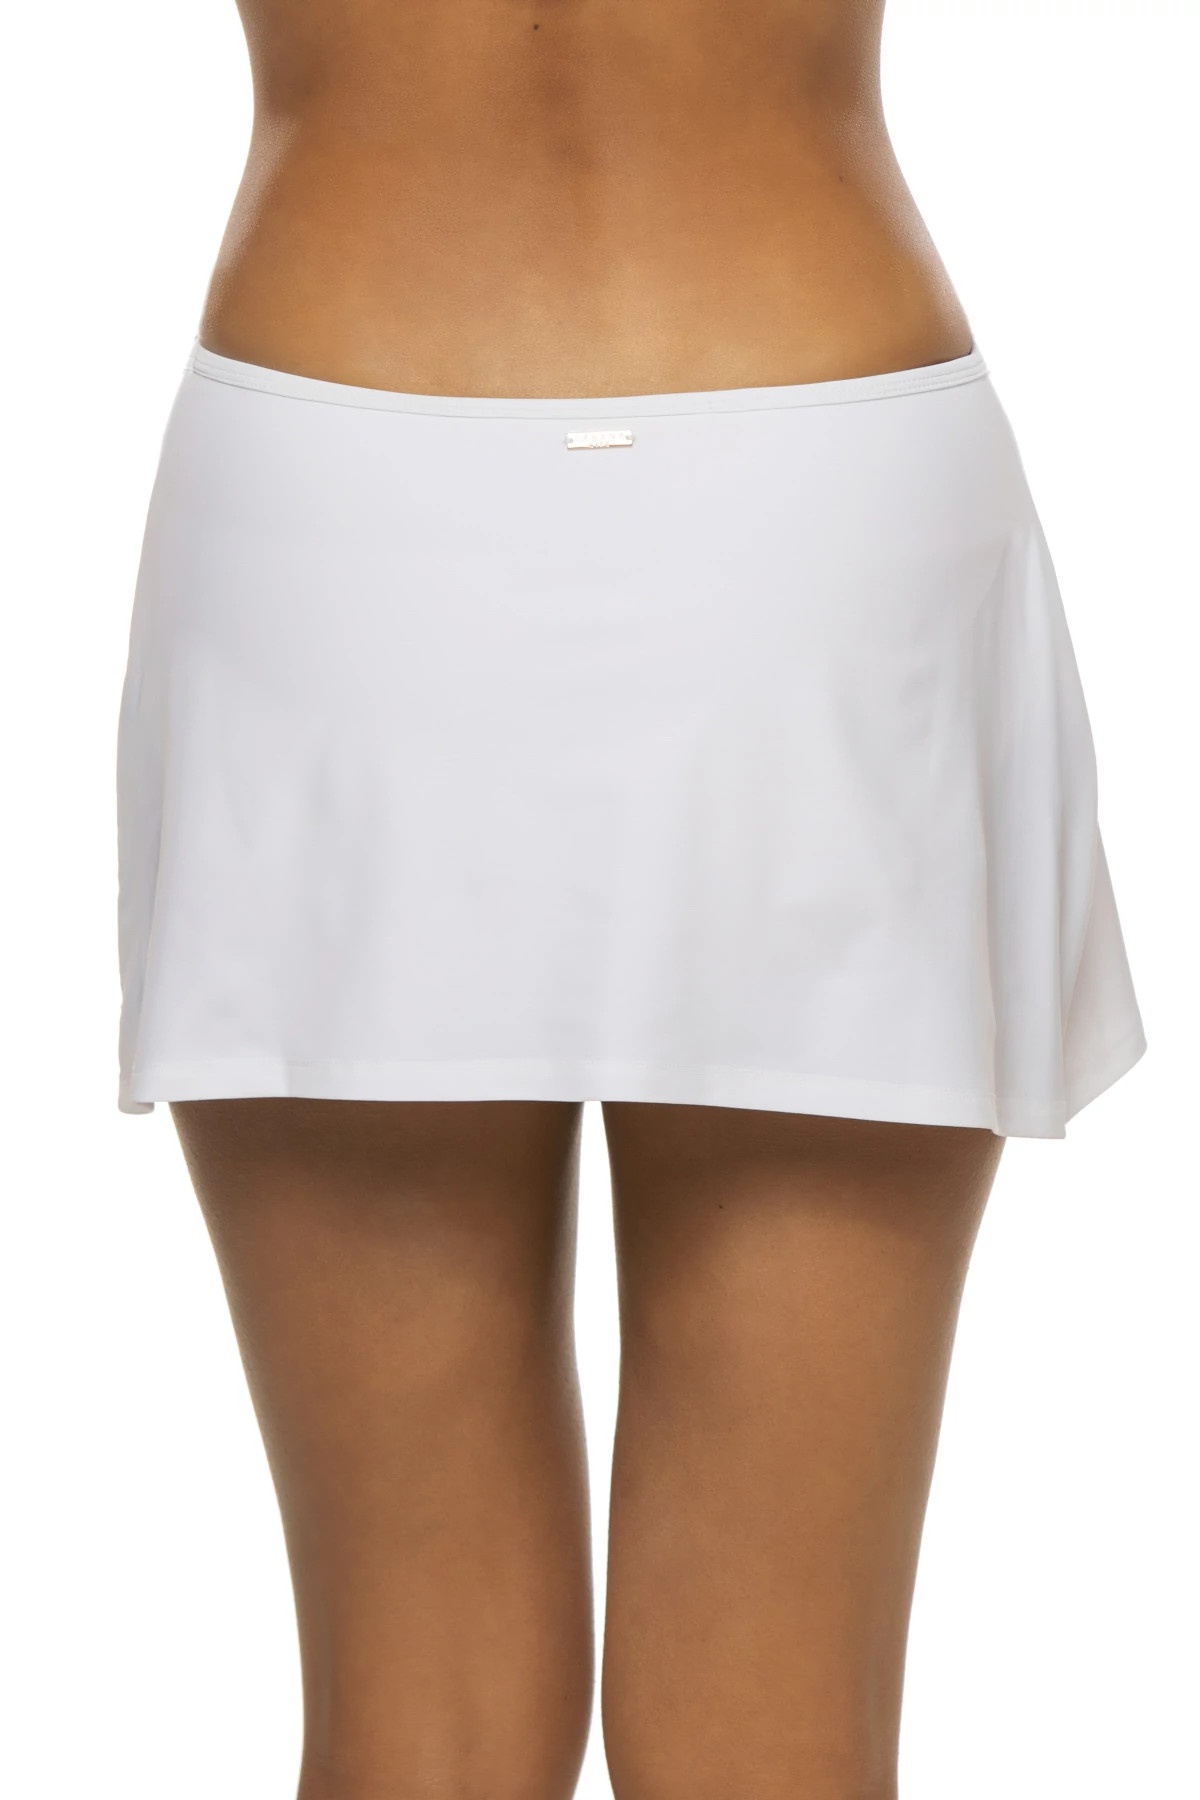 WHITE Cinch Side Skirted Hipster Bikini Bottom image number 2